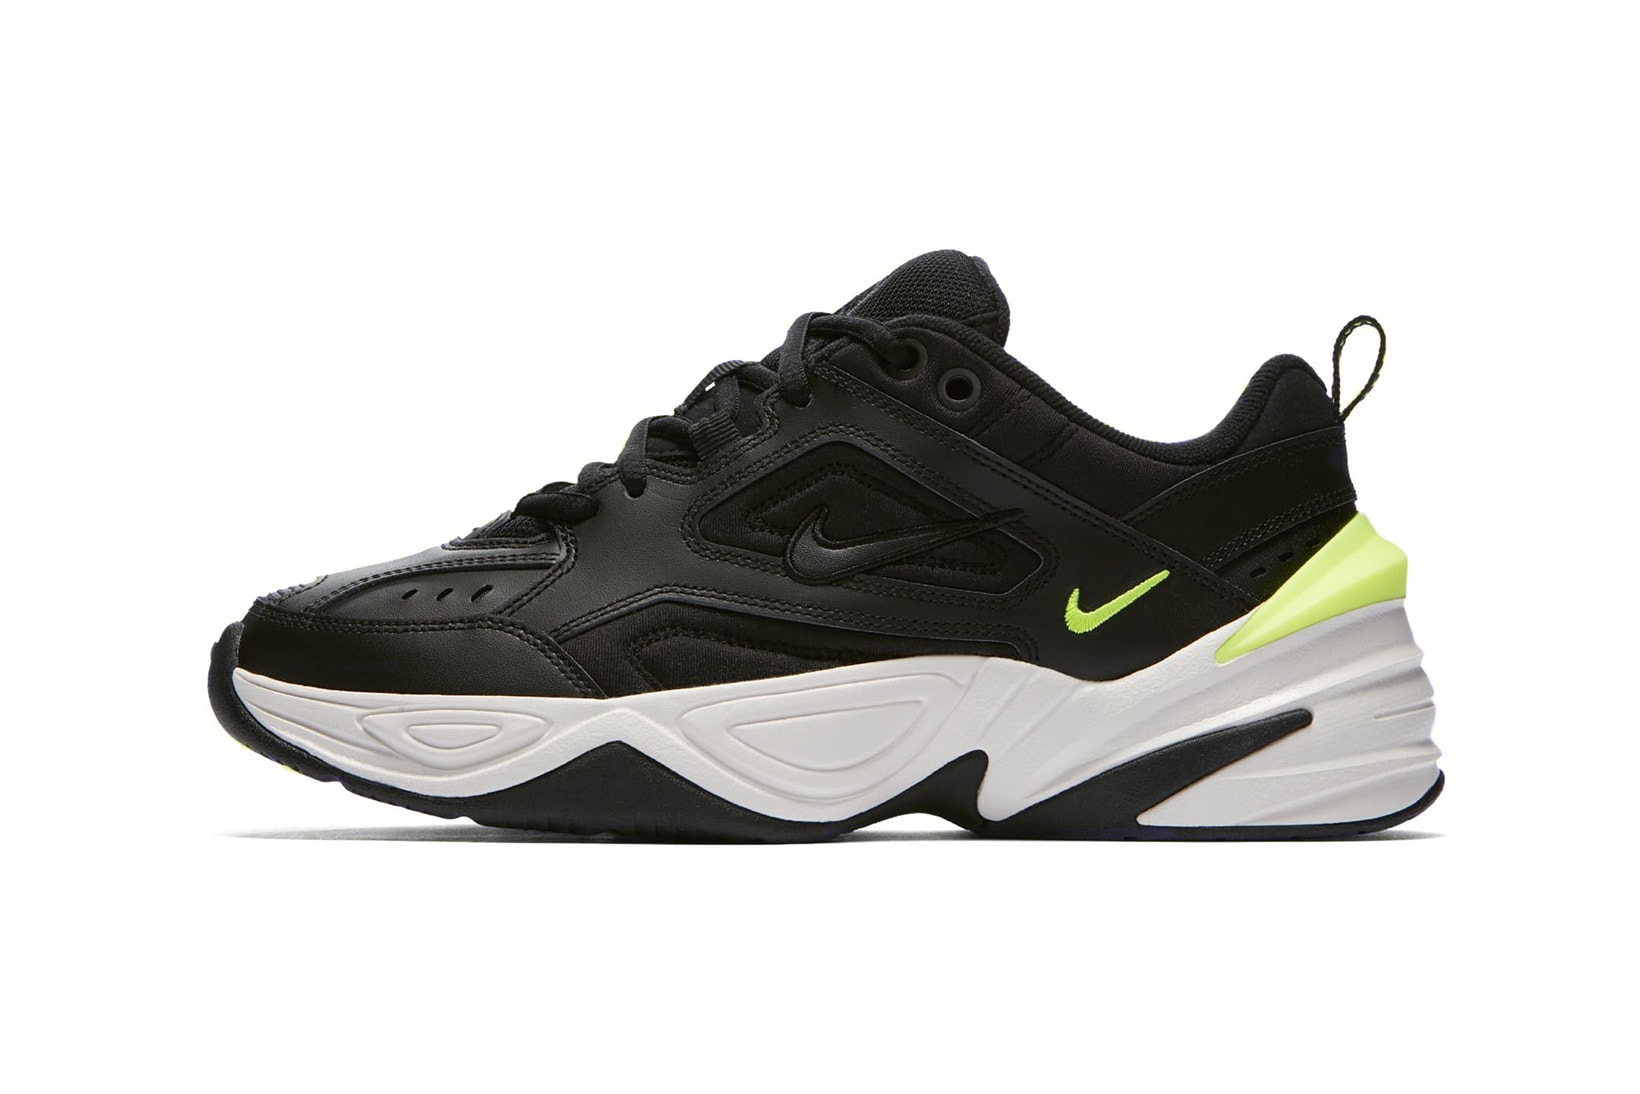 Nike M2K Tekno black volt release date may 2018 19 info drop sneakers shoes footwear